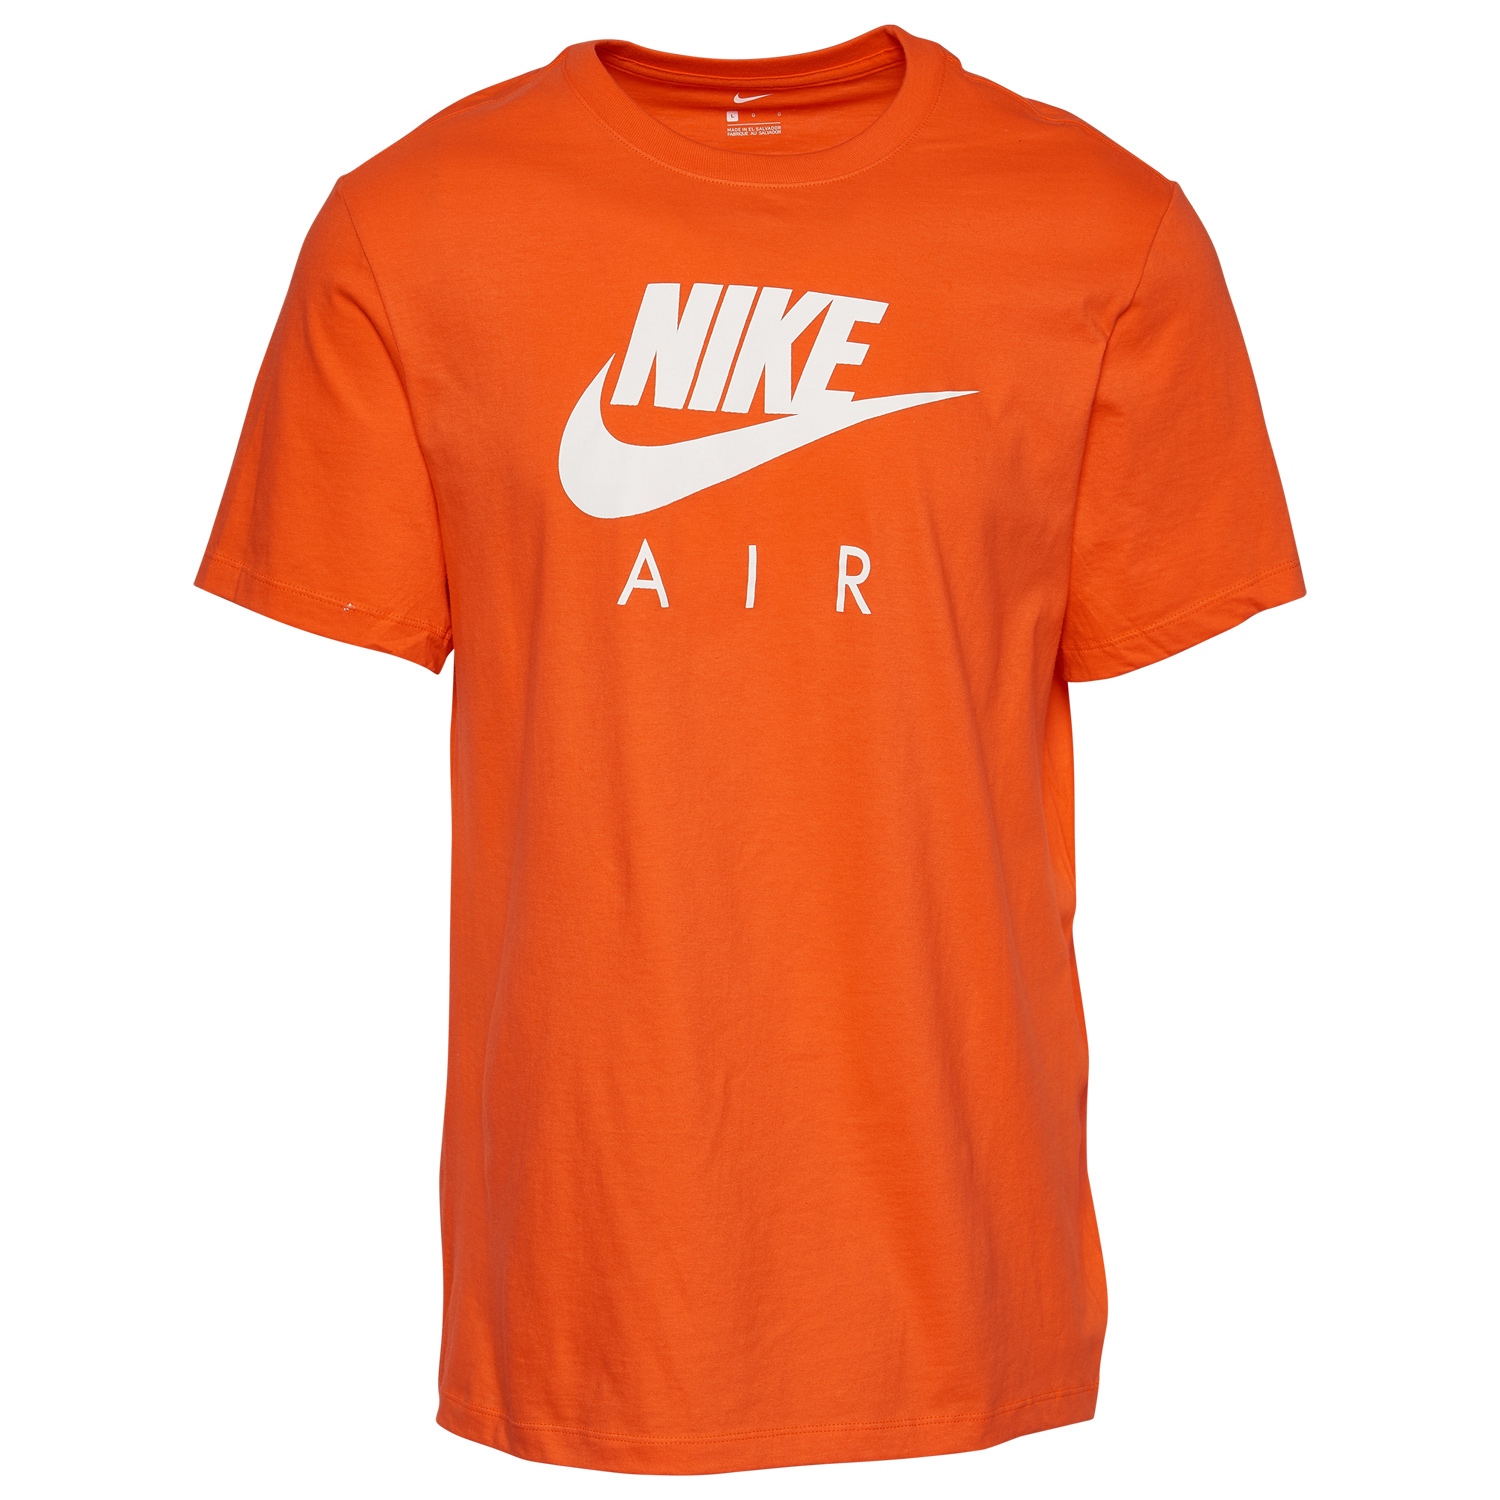 nike-air-futura-orange-t-shirt